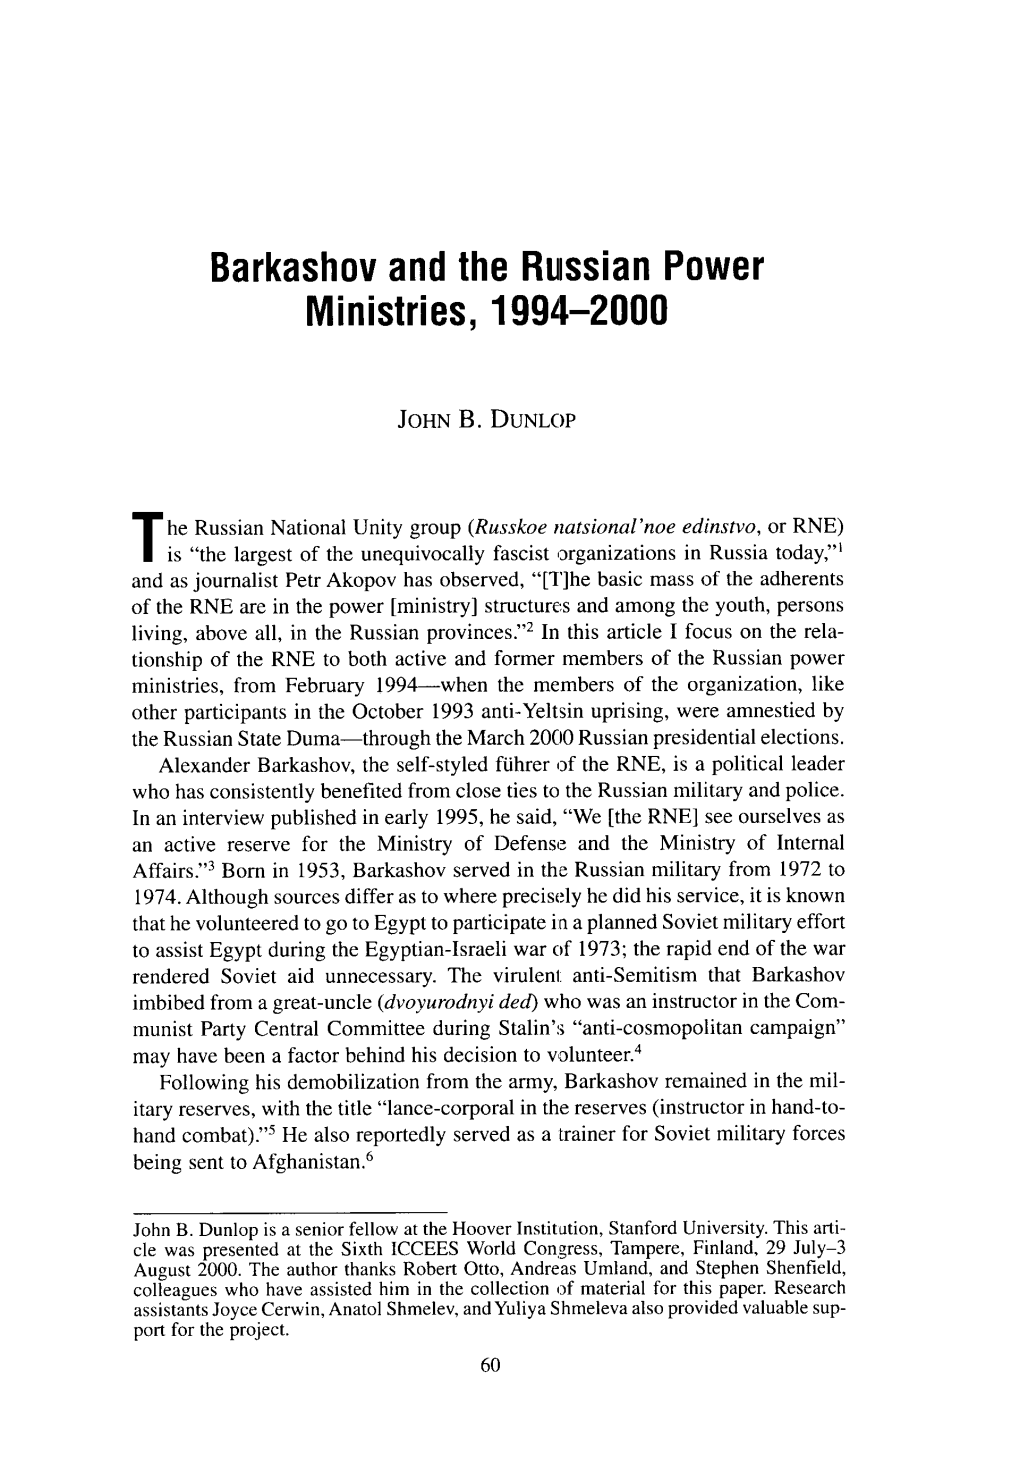 Barkashov and the Ruissian Power Ministries, 1994-2000